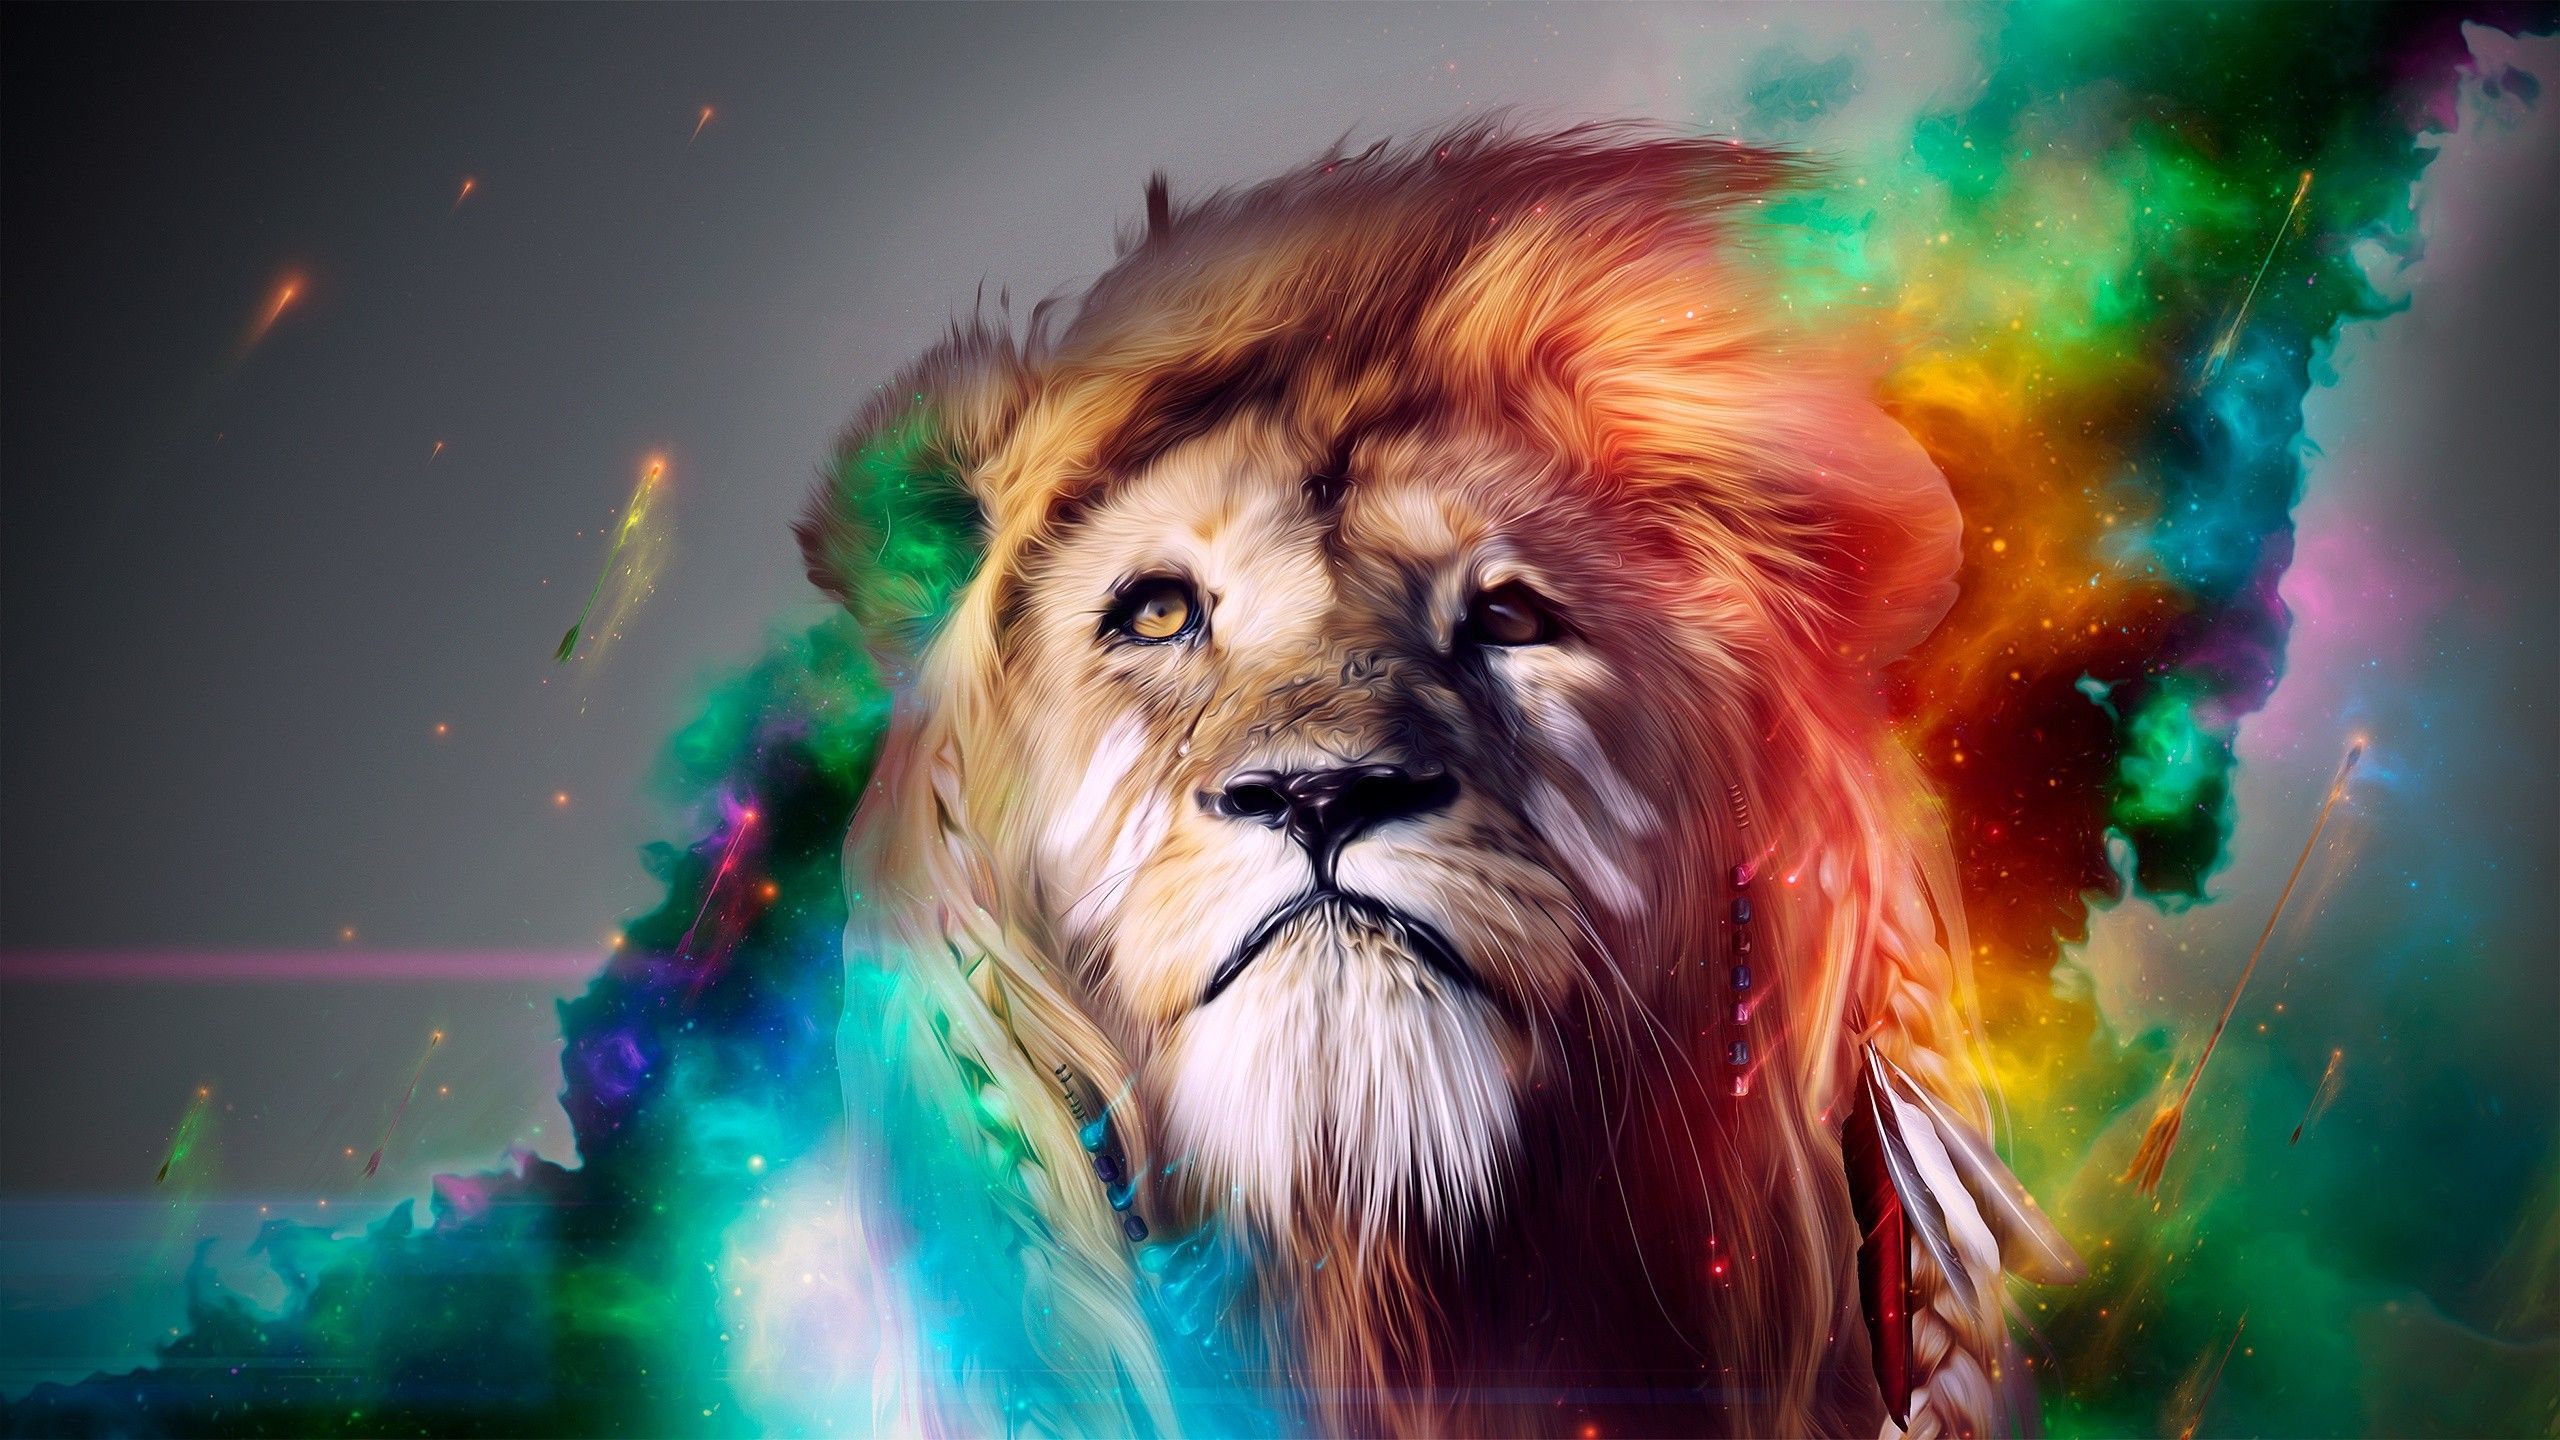 Amazing Lion wallpaper | 2560x1440 | #11352